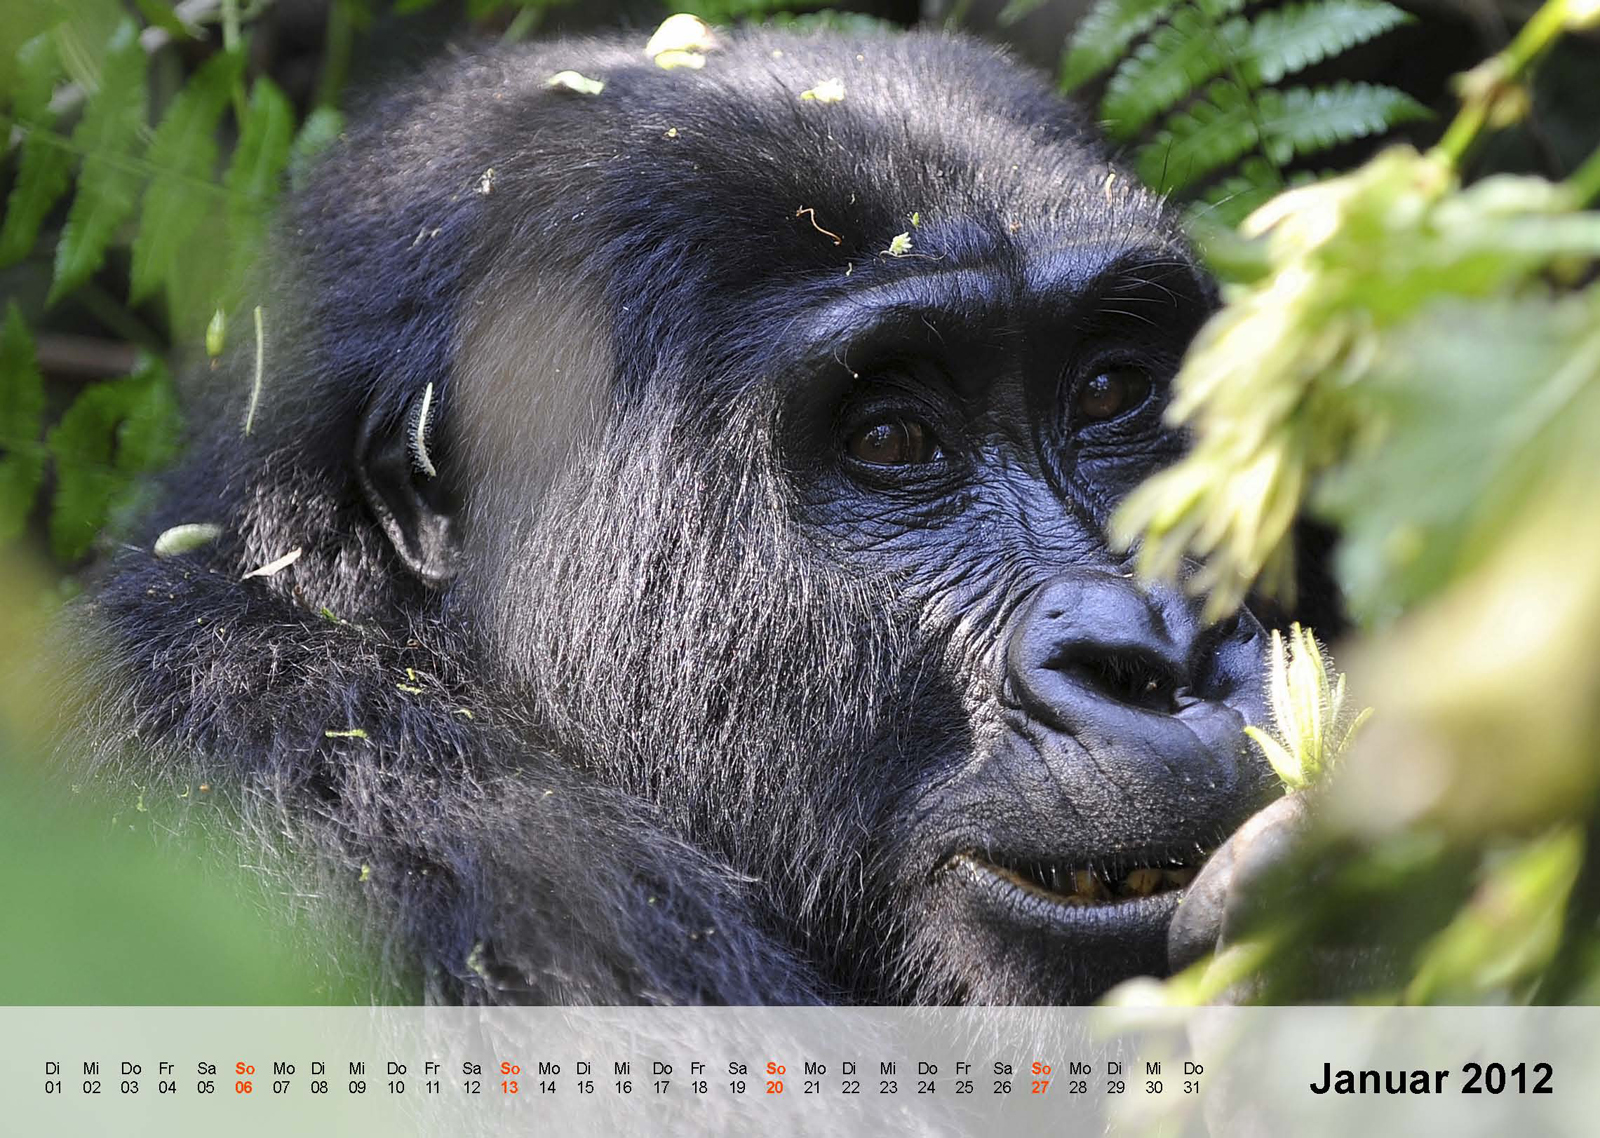 Berggorilla | Mountain gorilla | Bwindi Impenetrable National Park | Uganda - Kalender 2012 - Januar